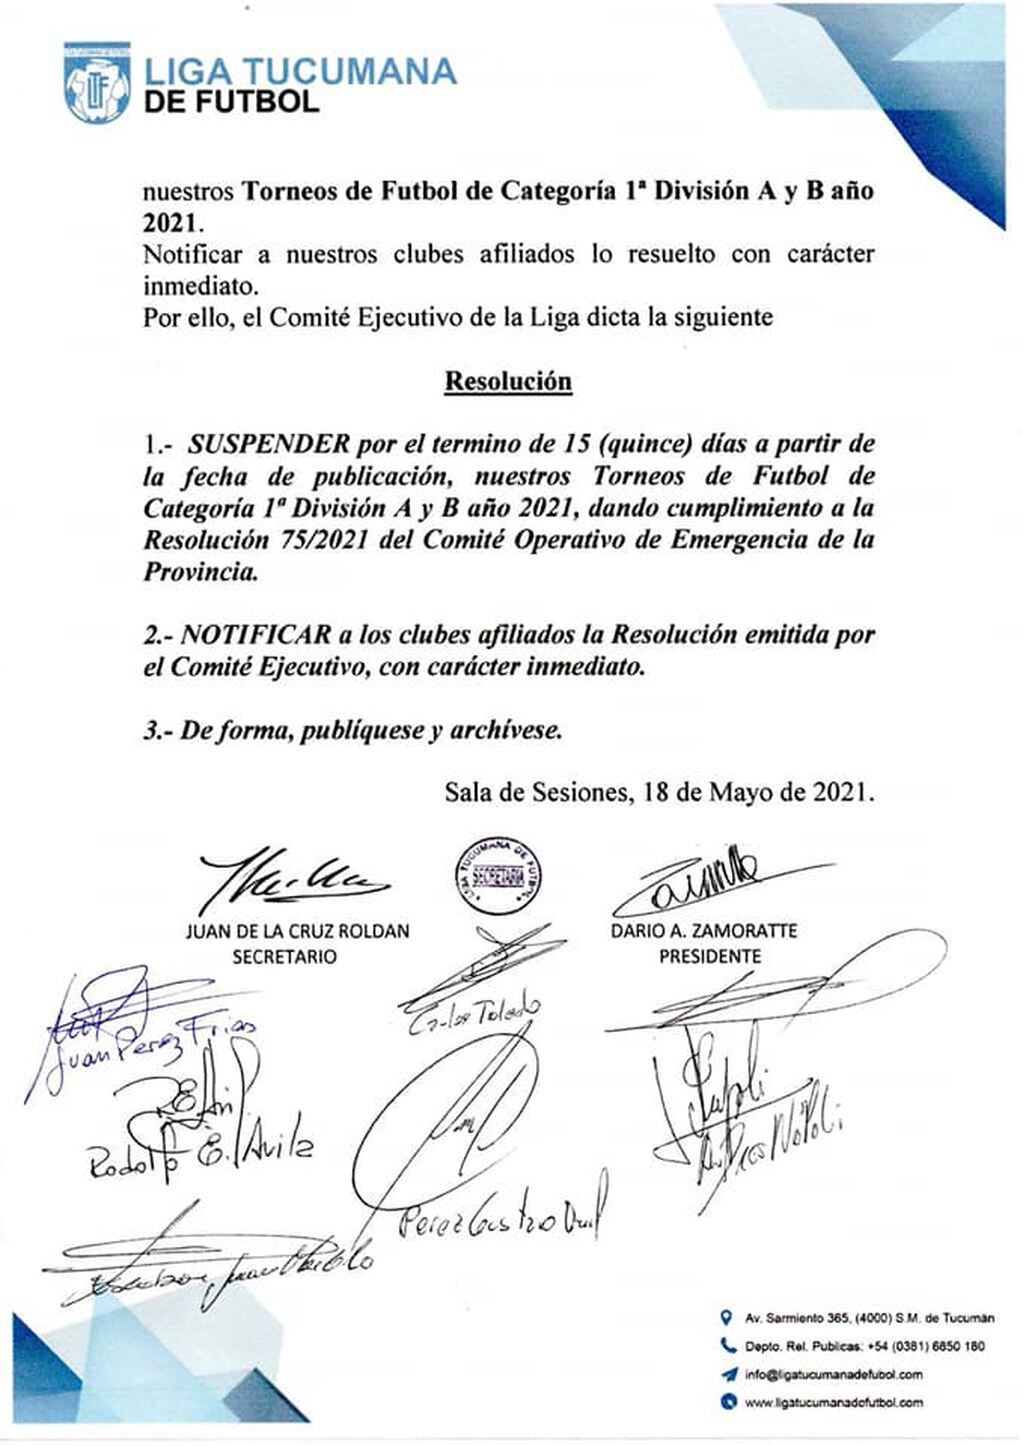 Comunicado oficial de la Liga Tucumana de Fútbol.